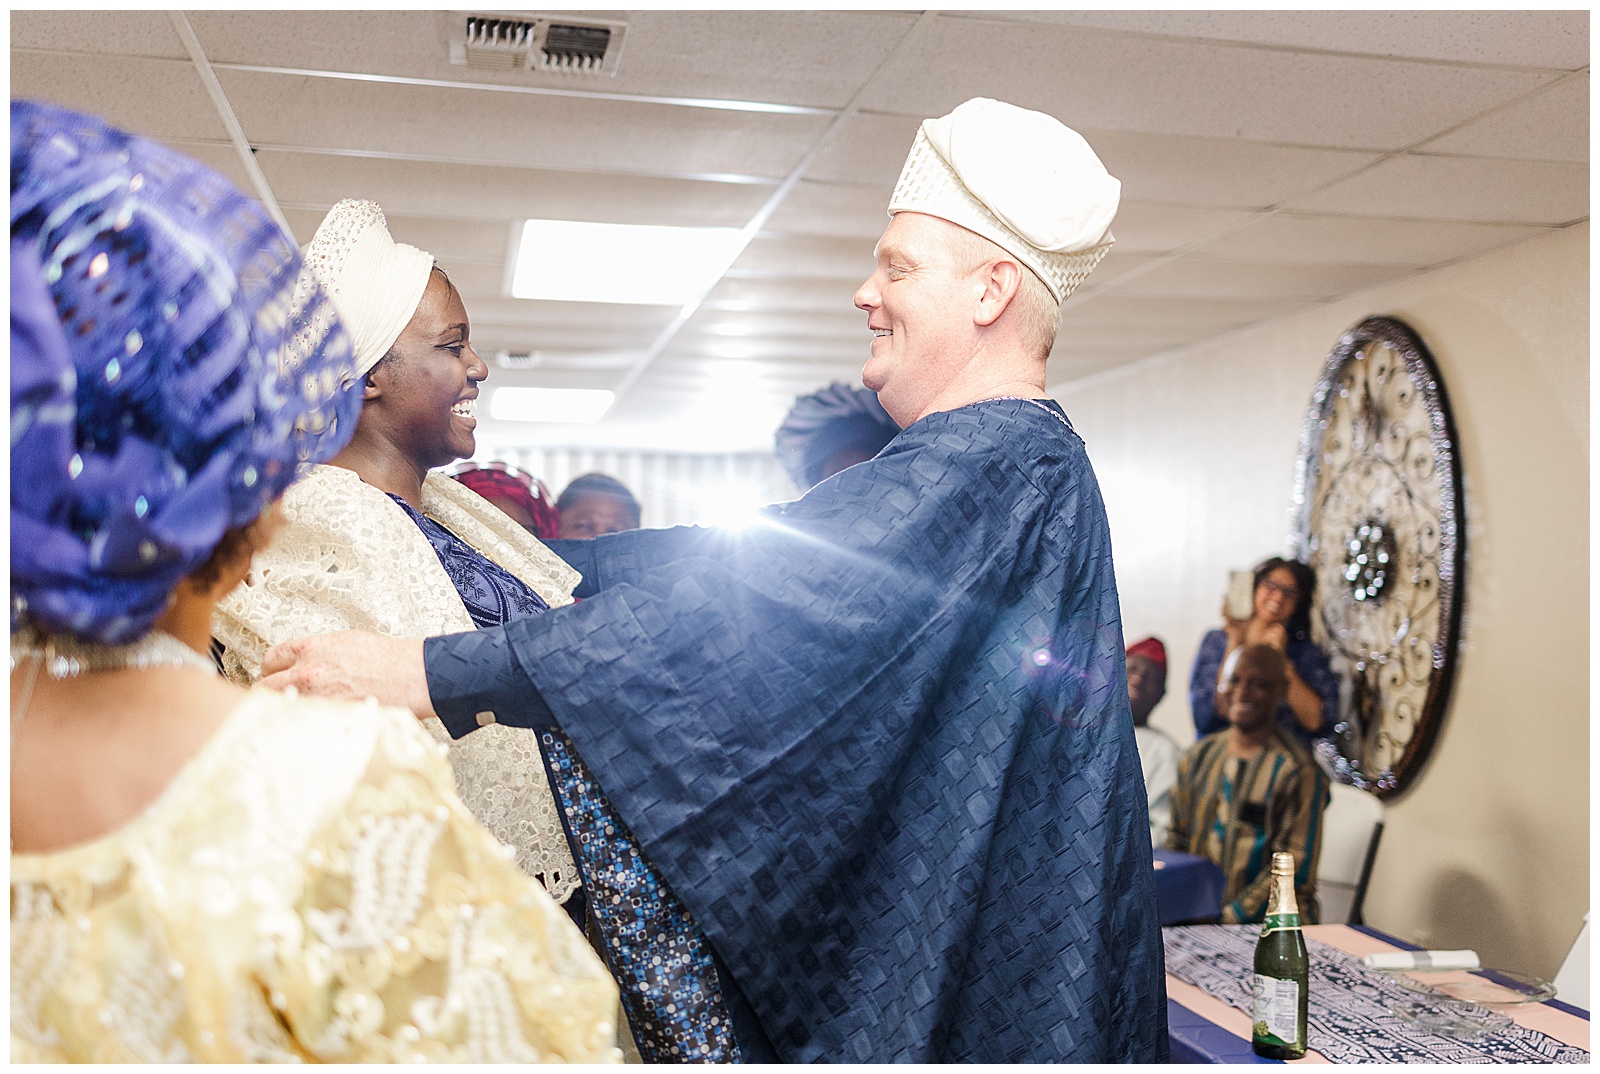 Groom uncovering bride's head at Nigerian reception